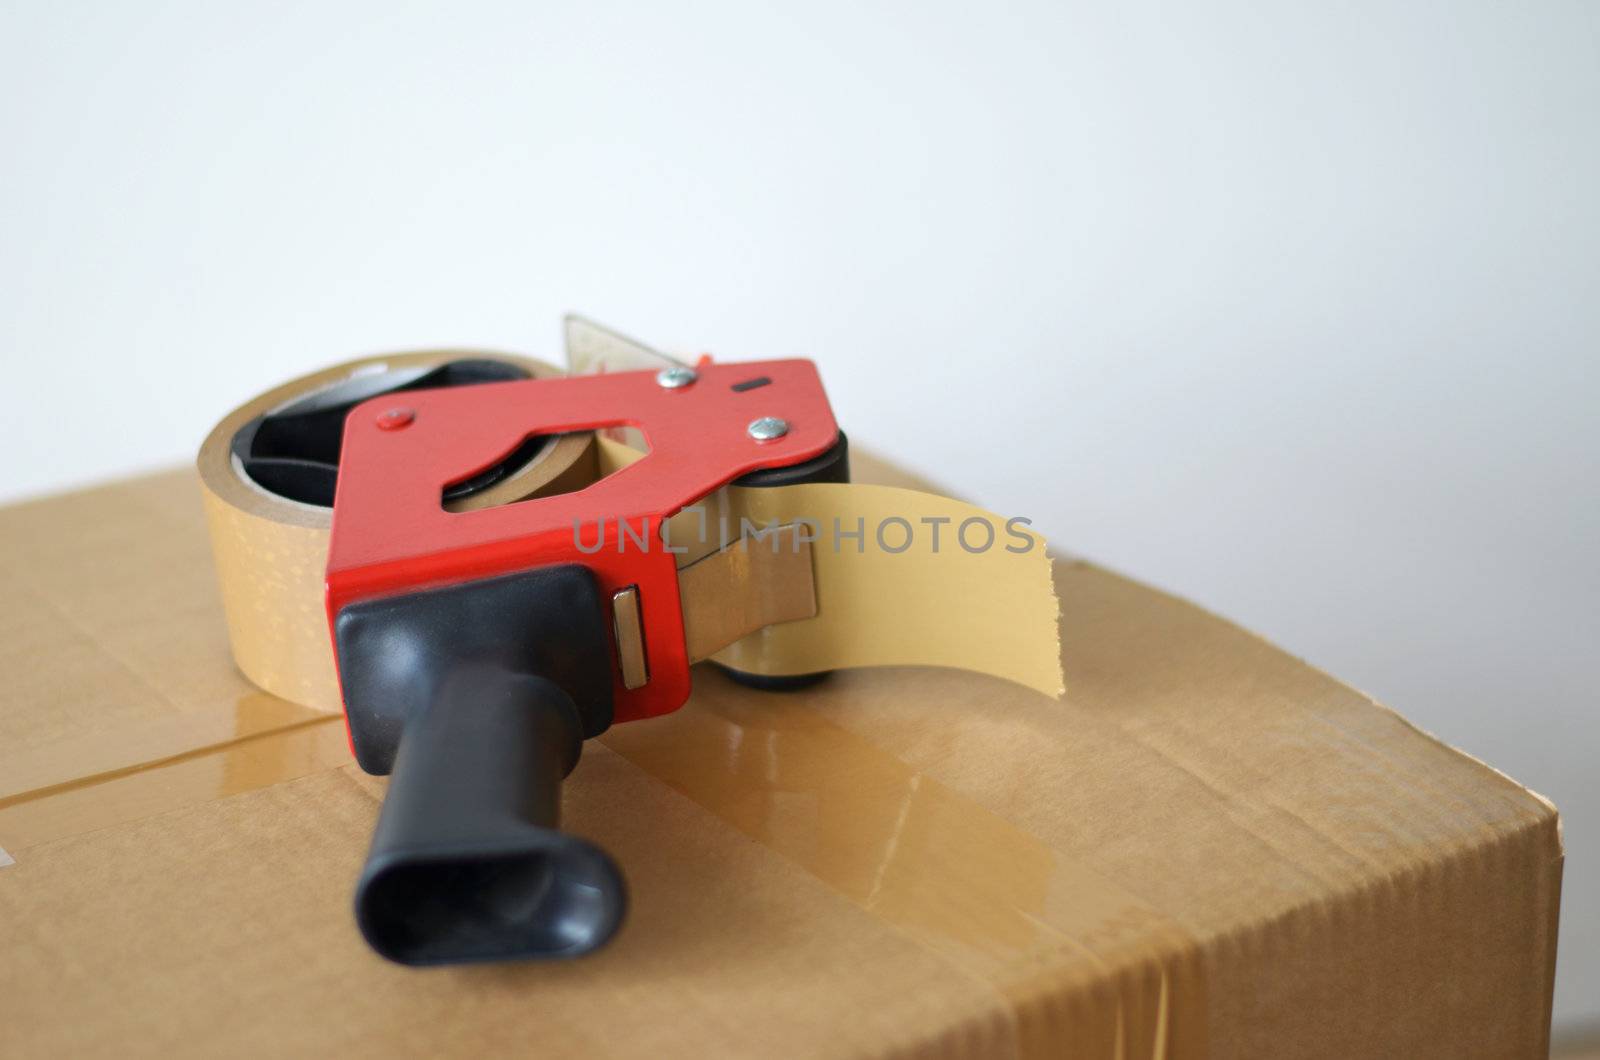 Self-adhesive tape dispenser on brown cardboard box